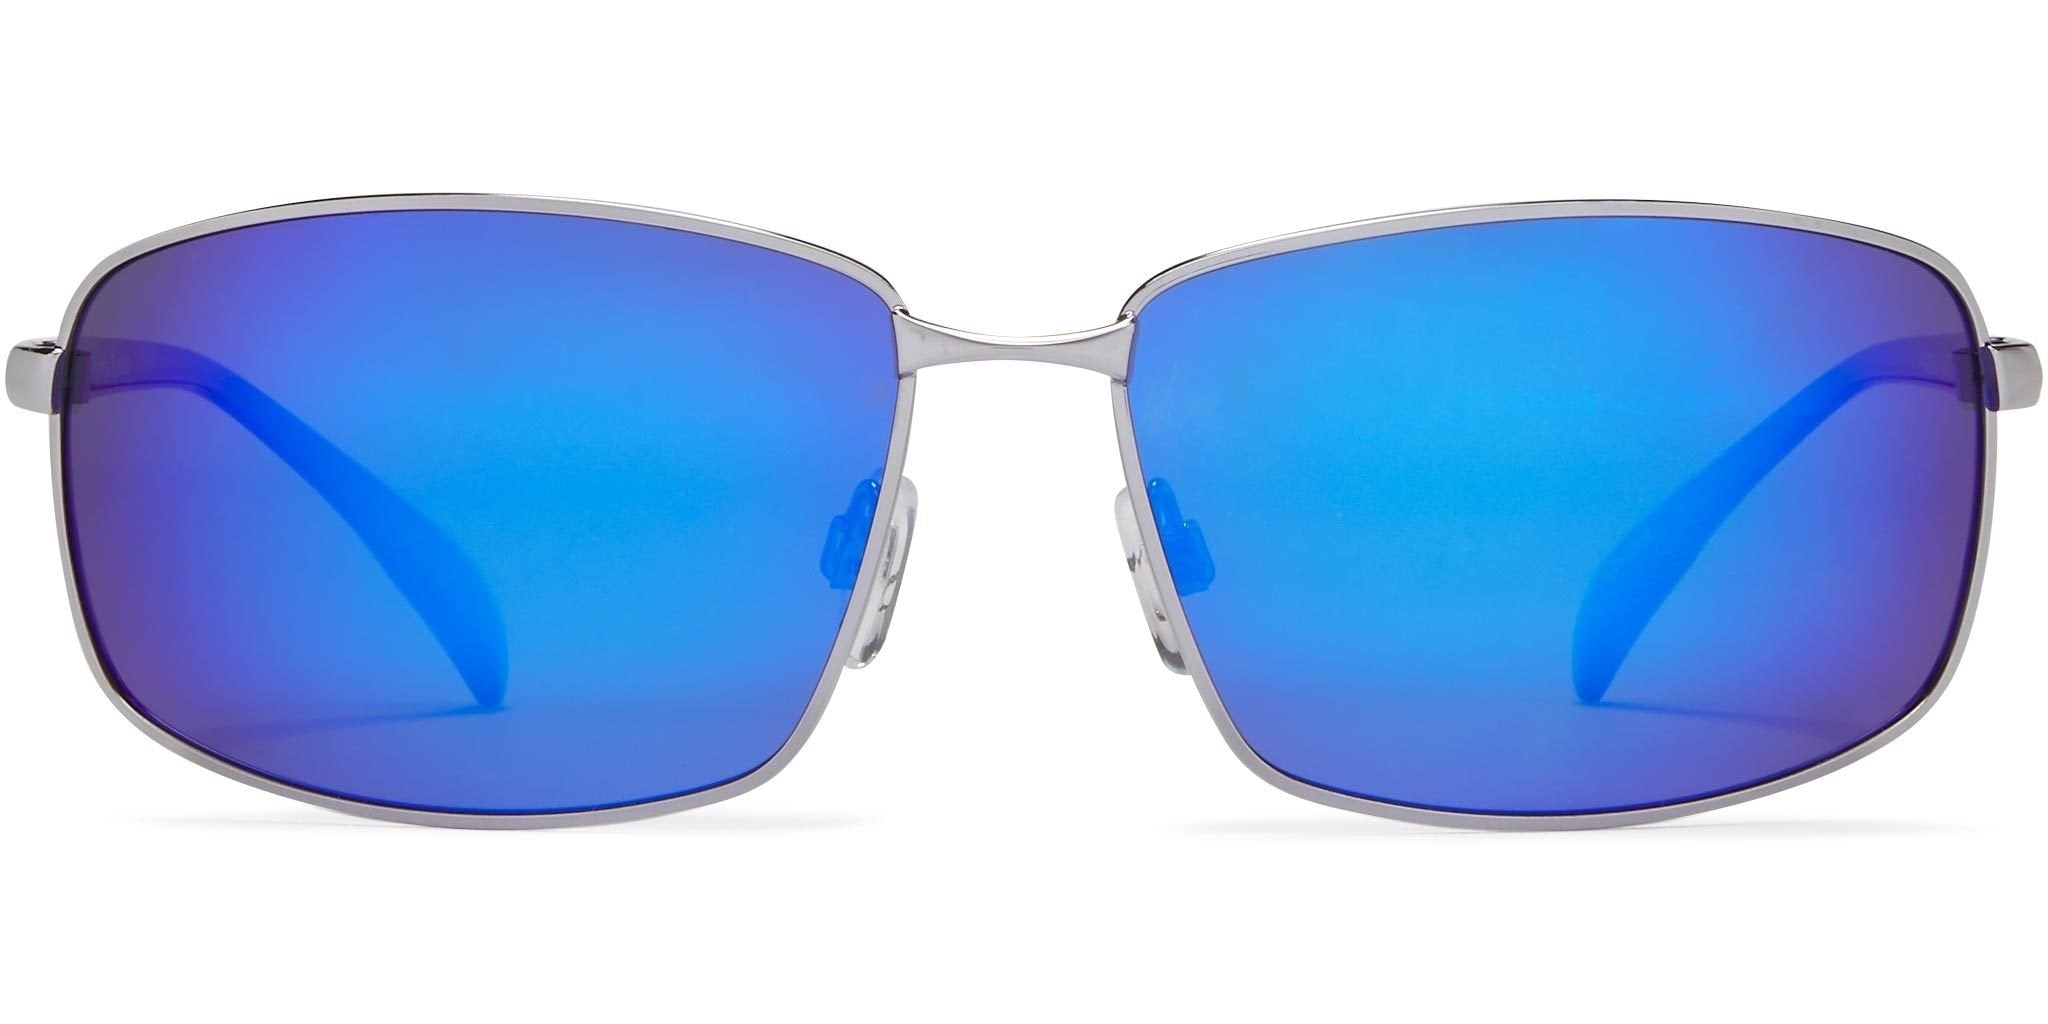 Men's Zebra Wood Frame Blue Mirror Polarized Sunglasses 100% Protection |  eBay